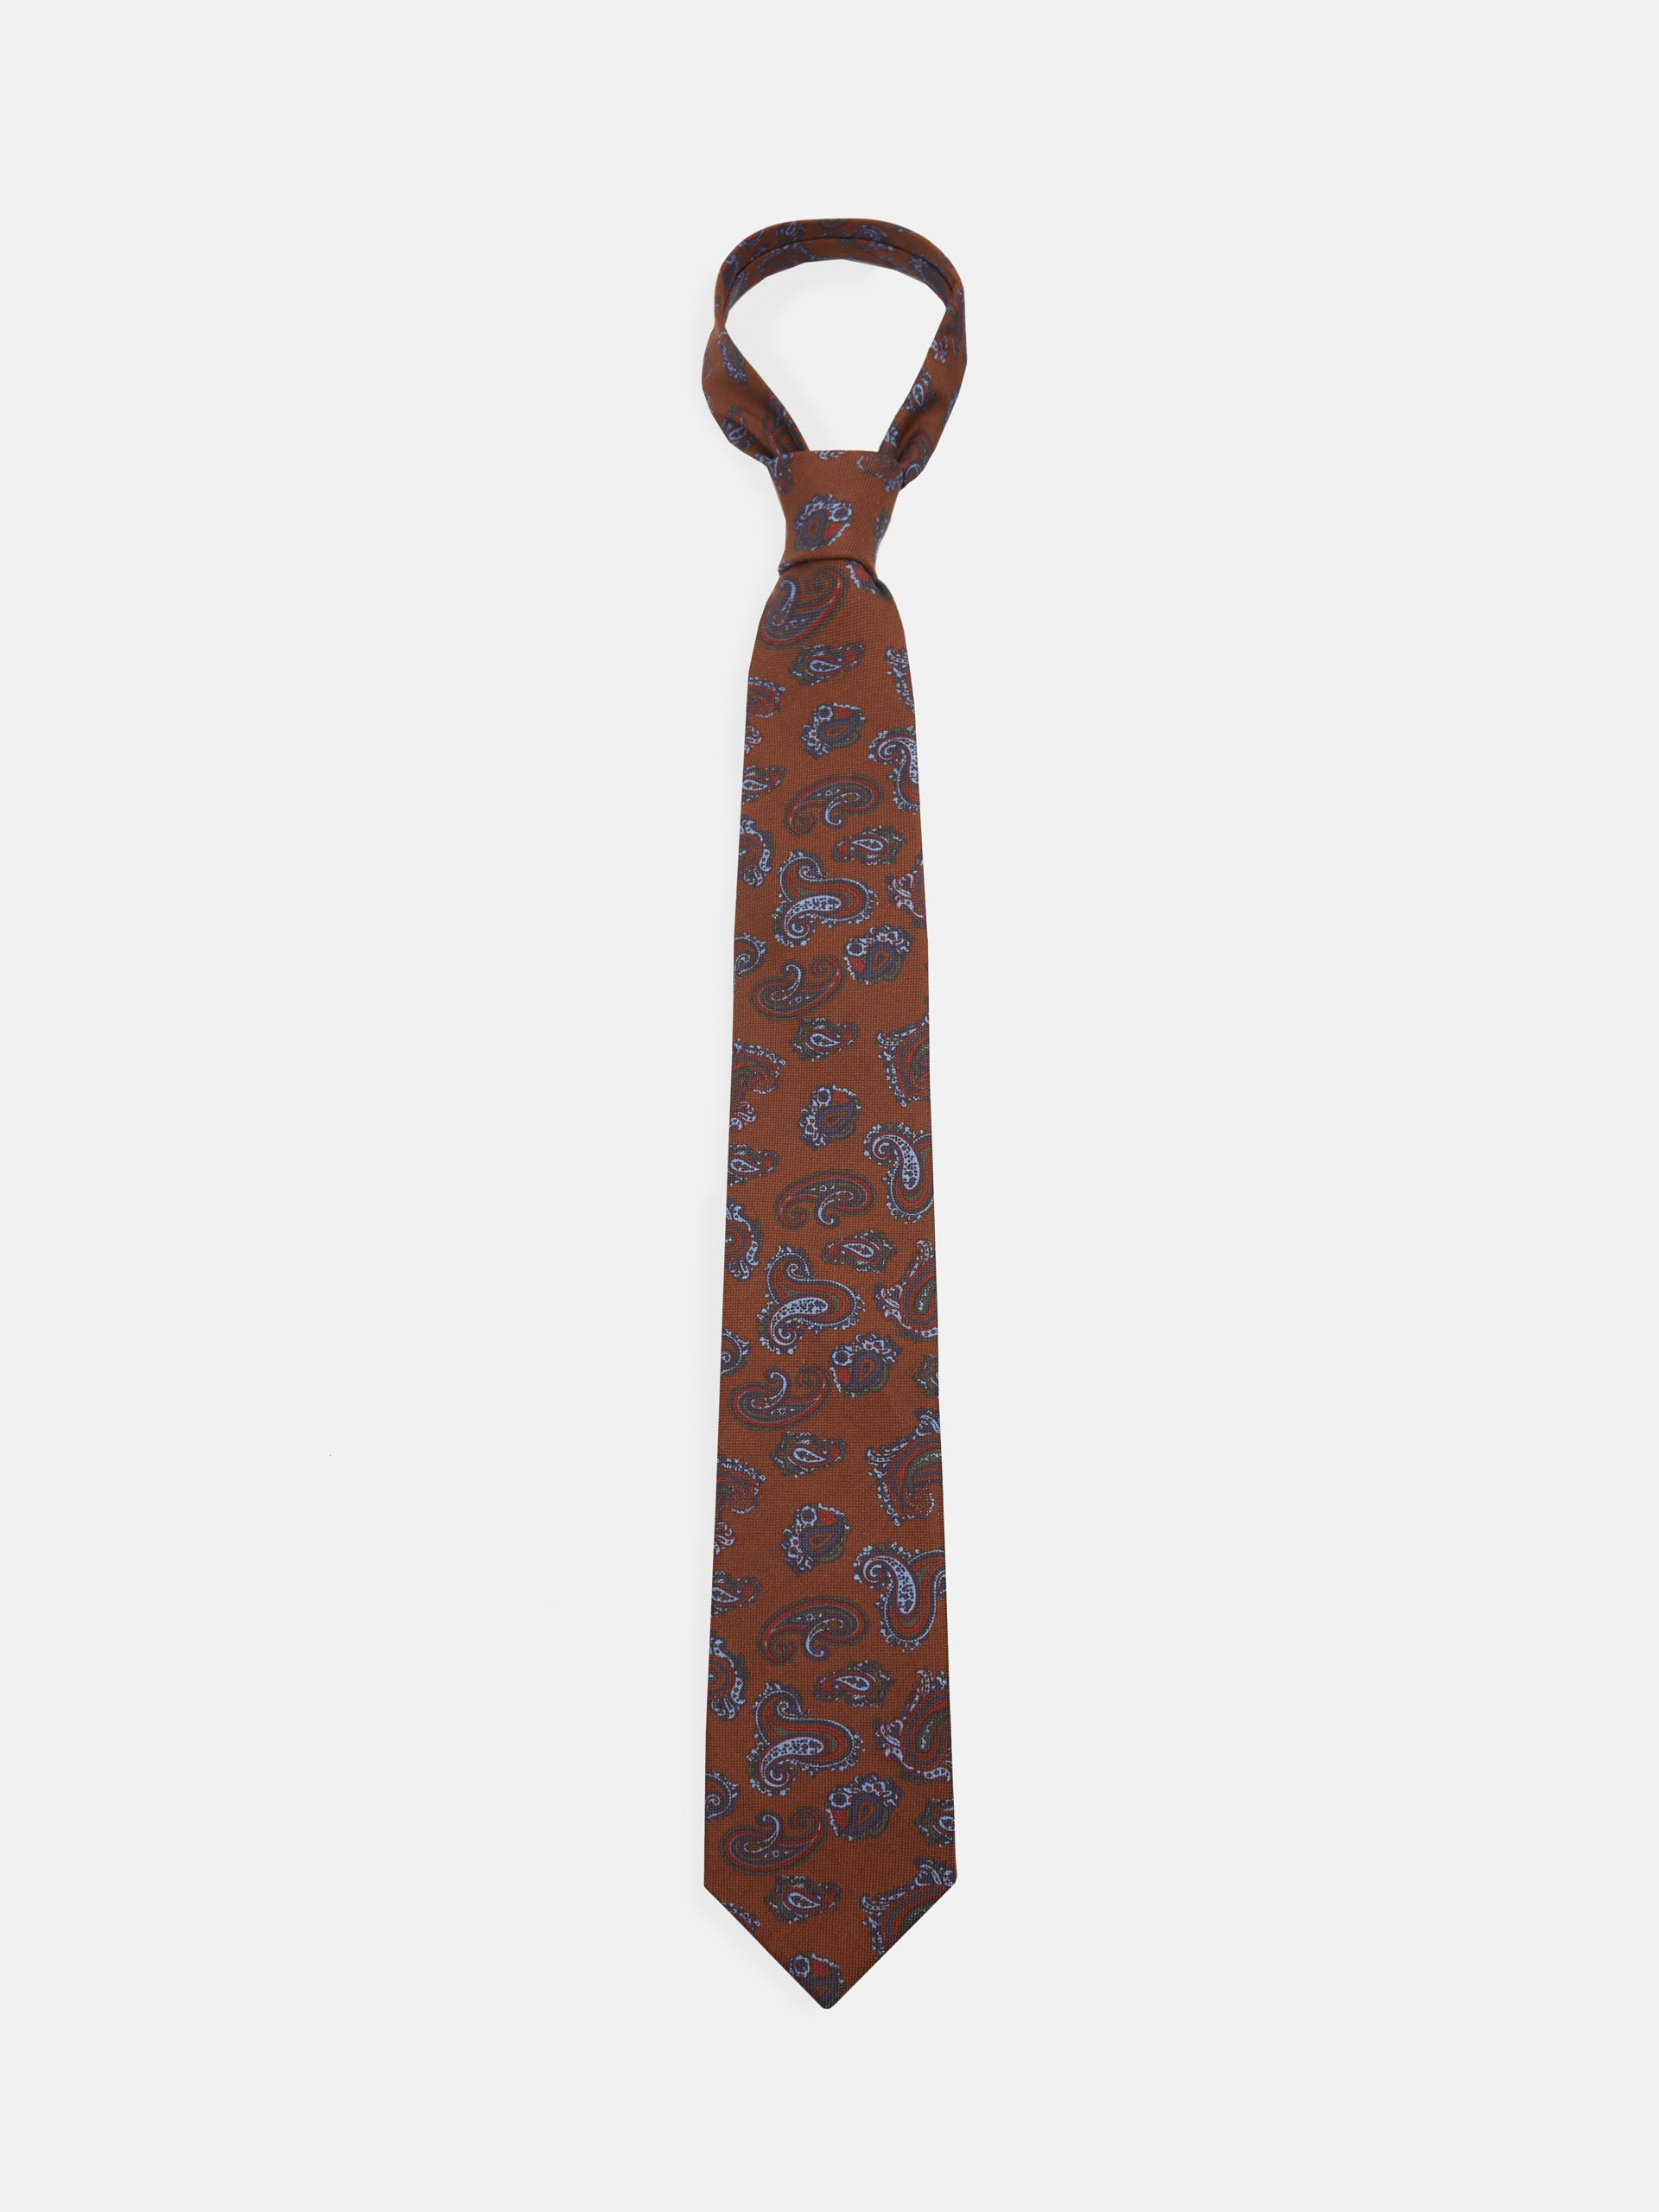 Cravate marron imprimé cachemire